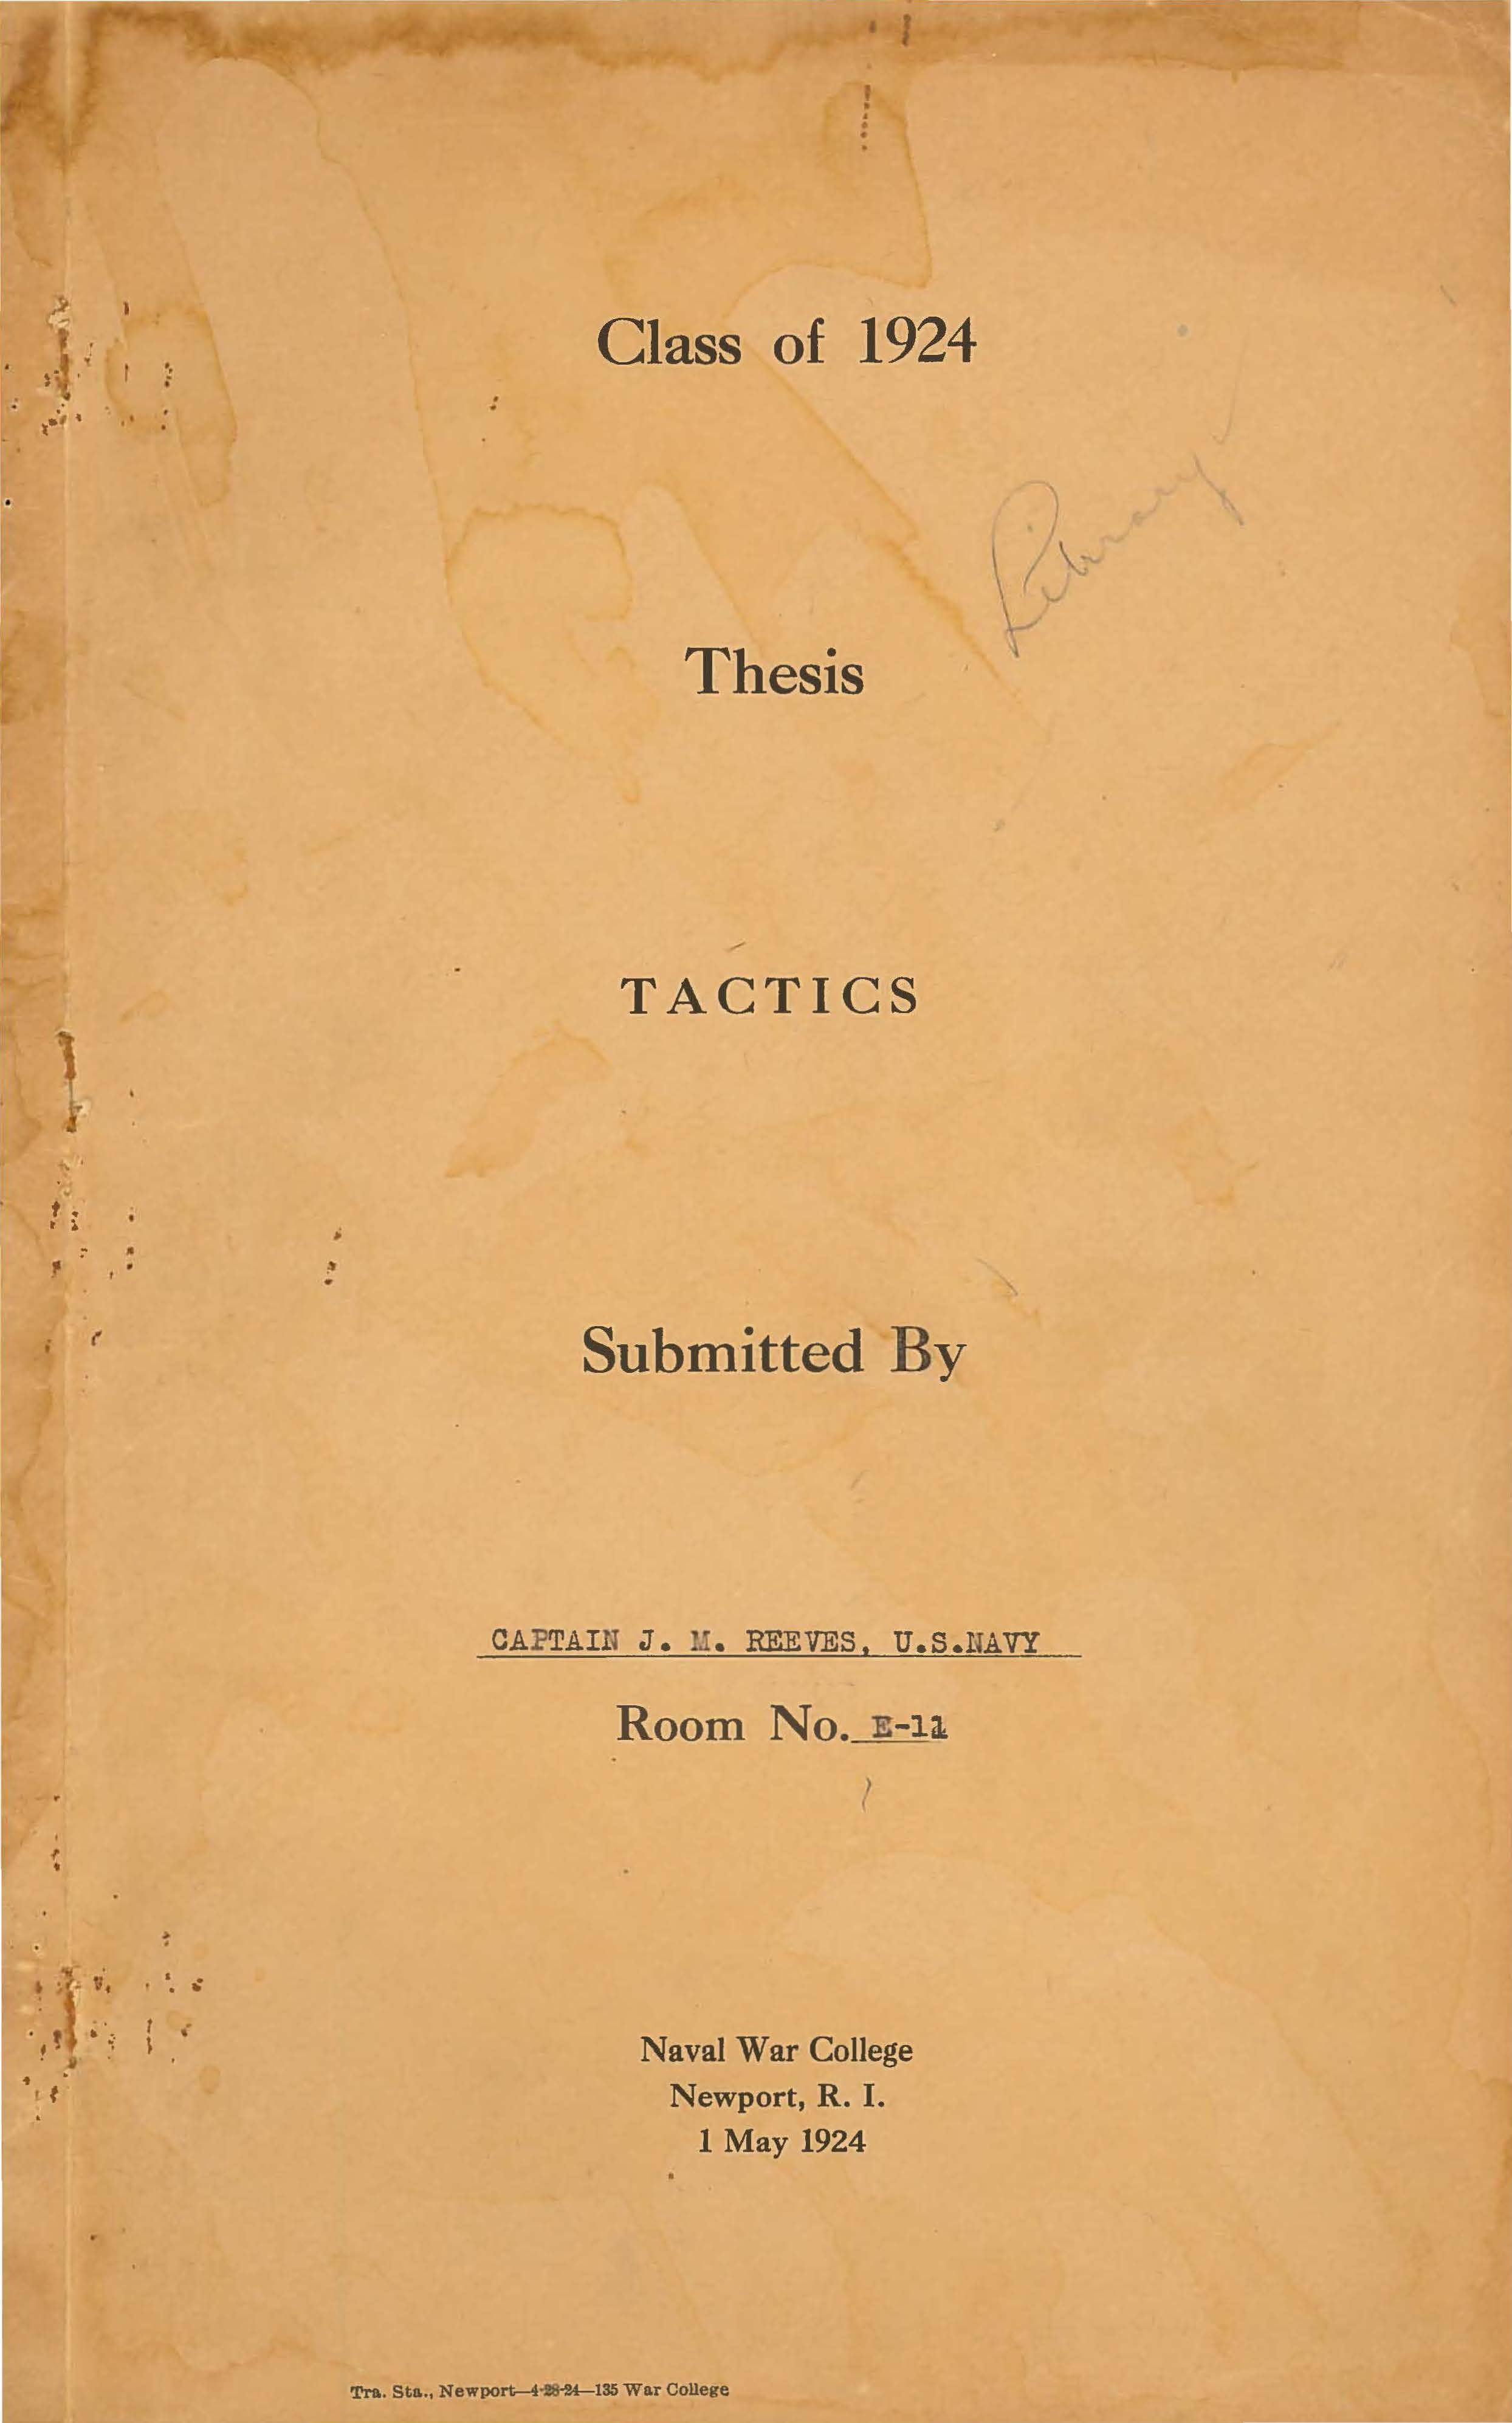 Tactics, Joseph M. Reeves